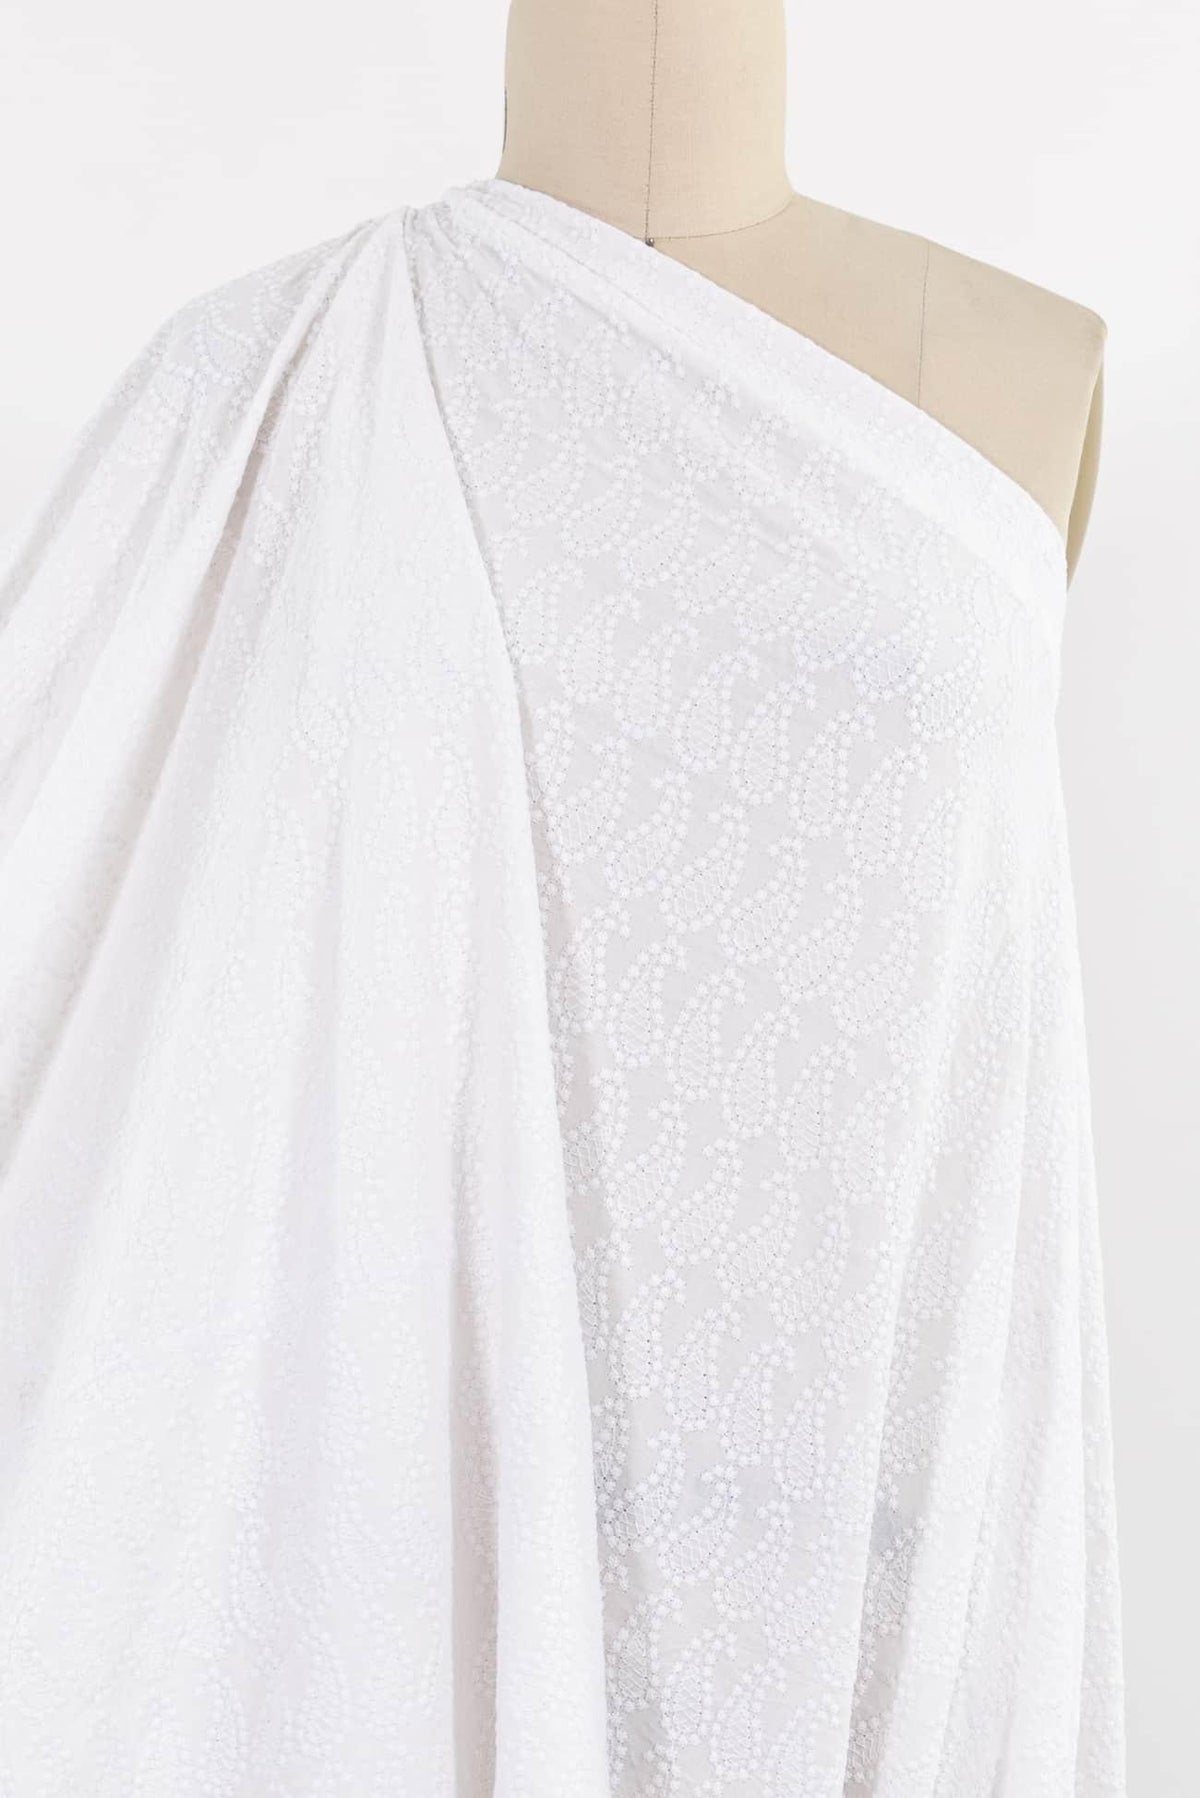 Leya Embroidered Indian Cotton Woven - Marcy Tilton Fabrics